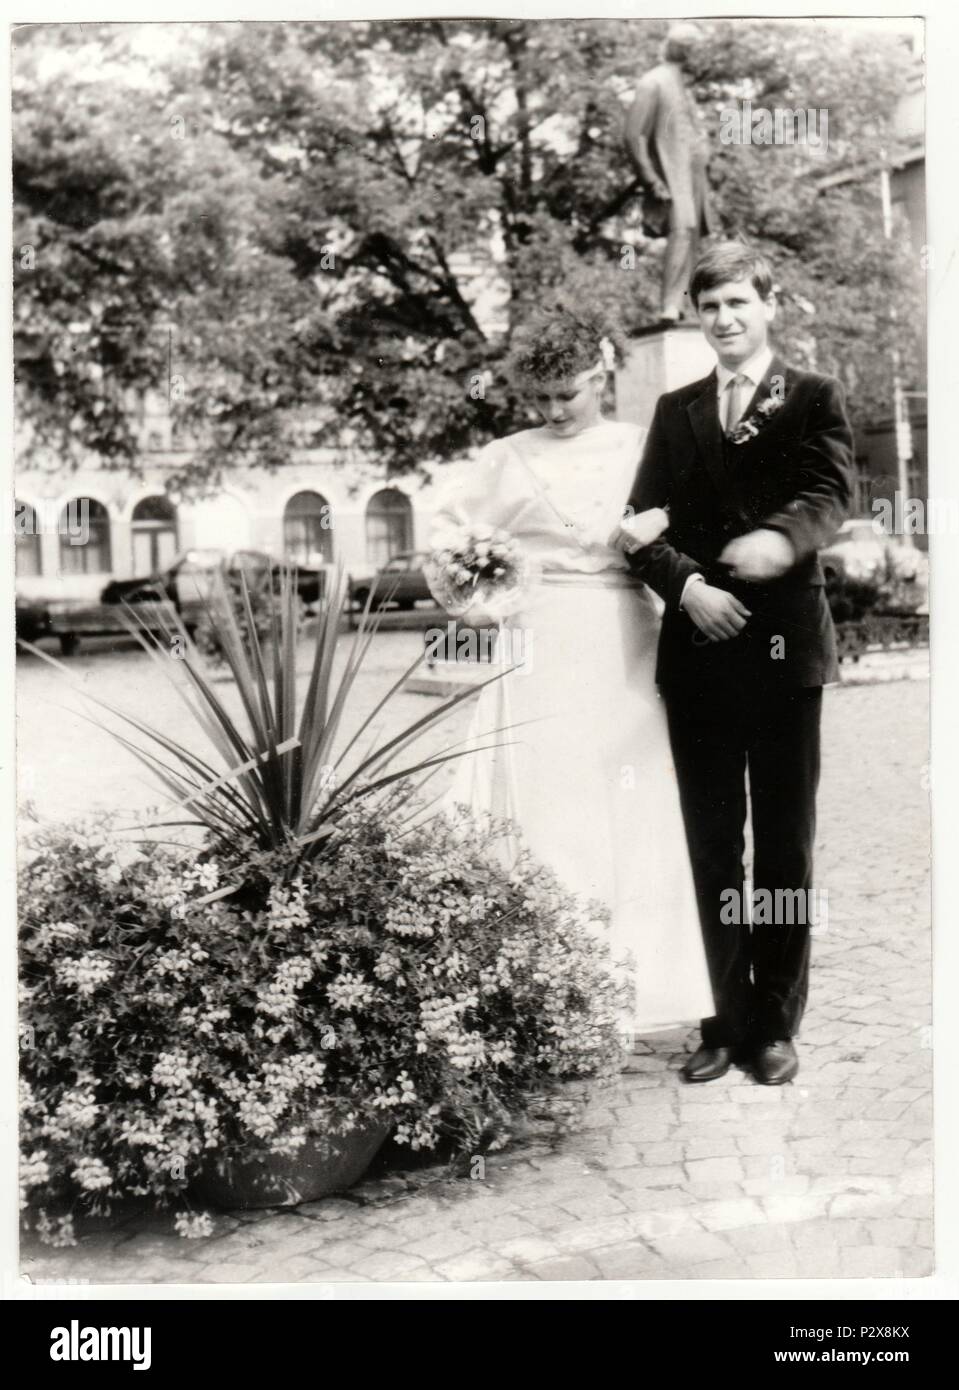 THE CZECHOSLOVAK SOCIALIST REPUBLIC - CIRCA 1980s: Vintage photo shows a bride with bridegroom. Bride holds wedding flowers (bouquet). Retro black & white  photography. Stock Photo